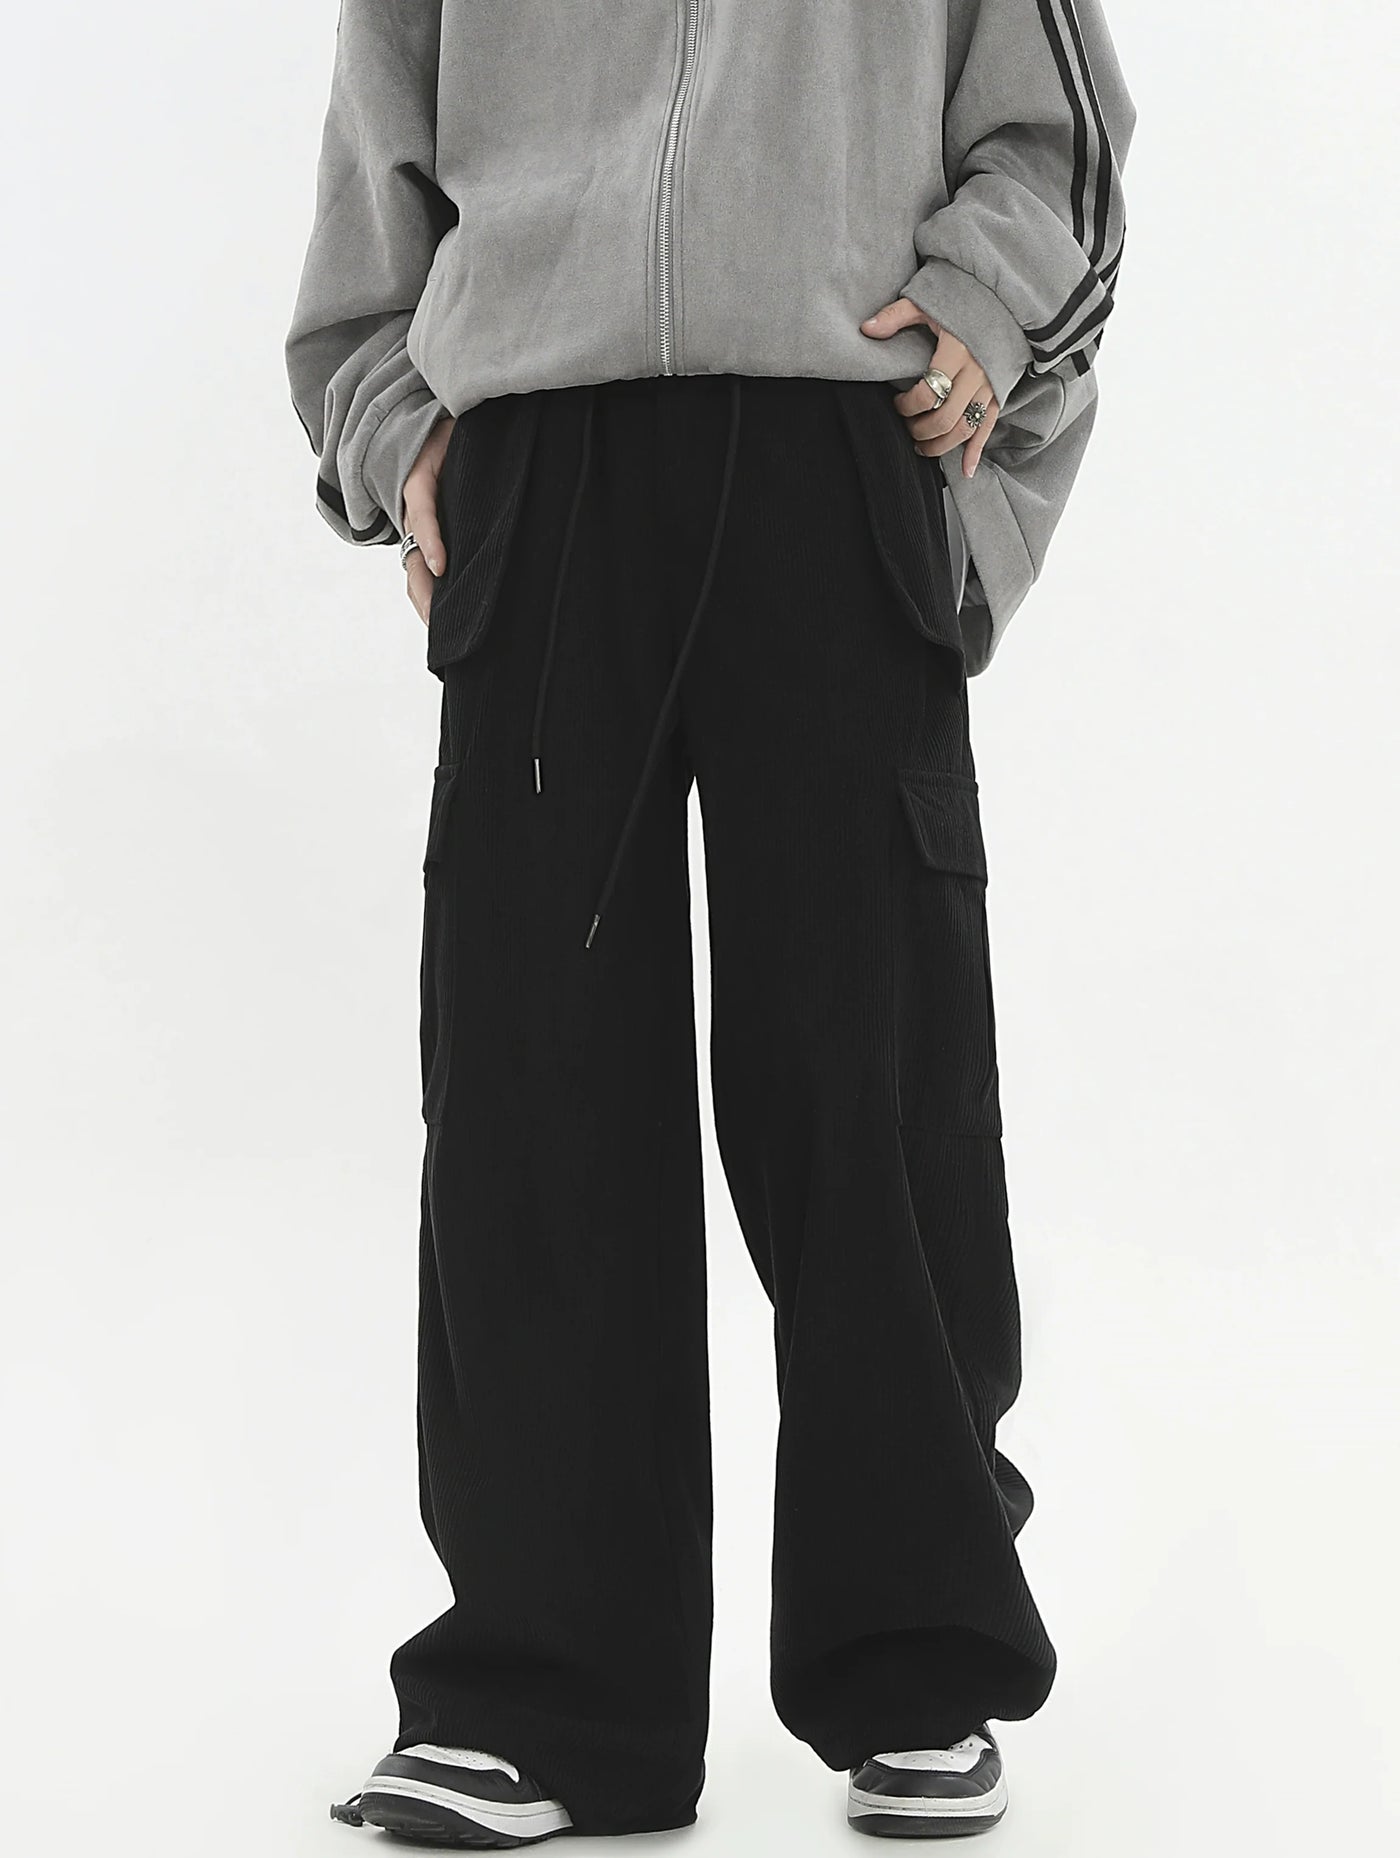 Drawstring Corduroy Cargo Pants Korean Street Fashion Pants By INS Korea Shop Online at OH Vault